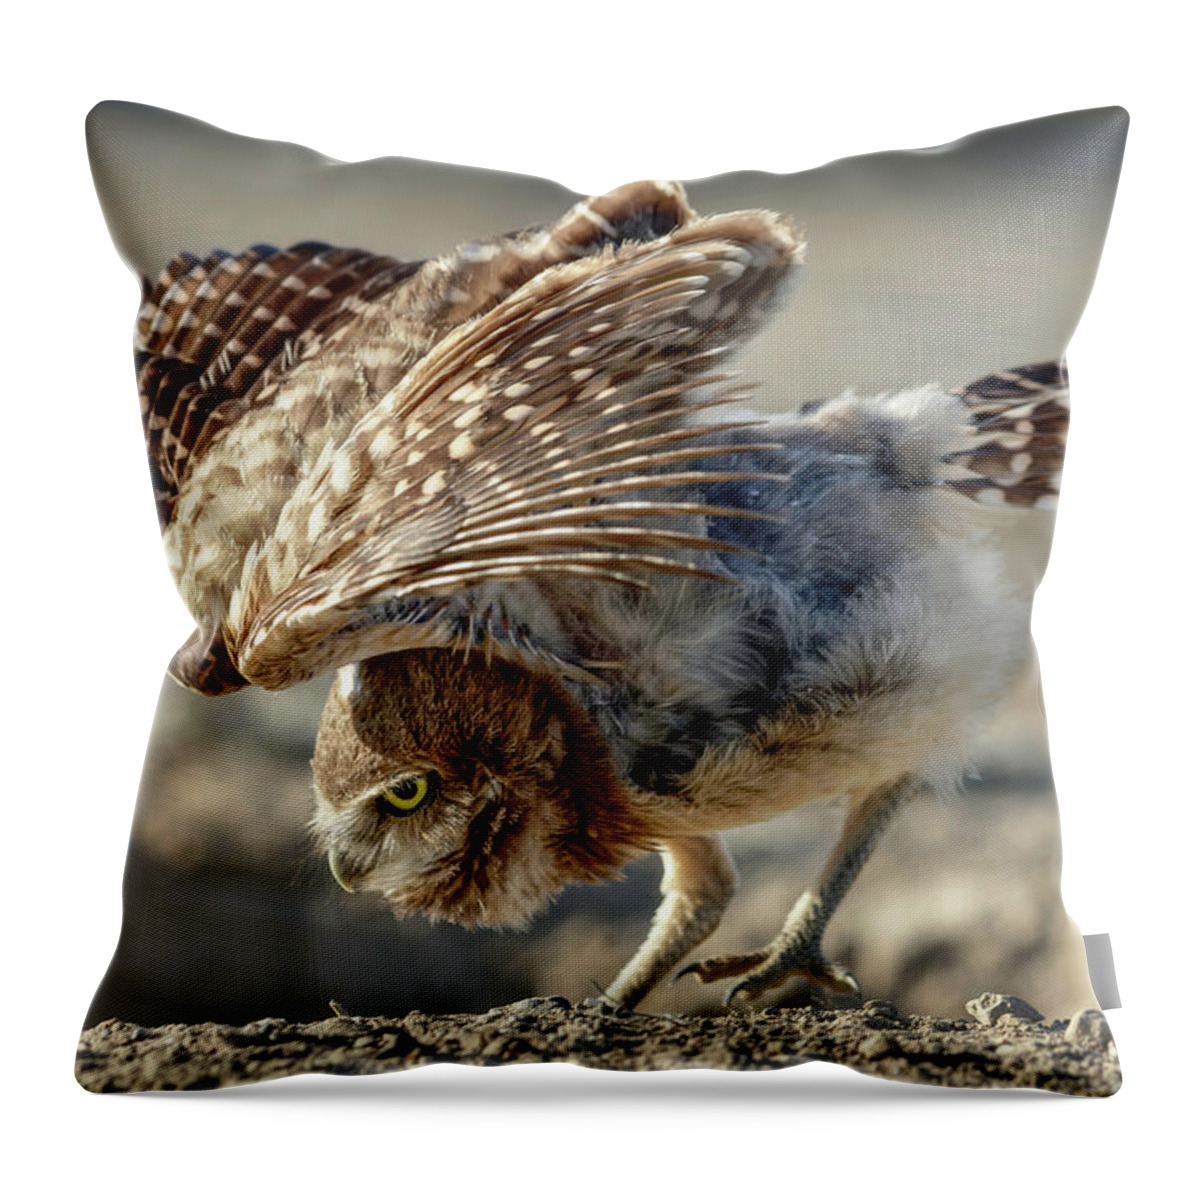 Burrowing Owlet Workout Throw Pillow featuring the photograph Burrowing Owlet Workout by Wes and Dotty Weber